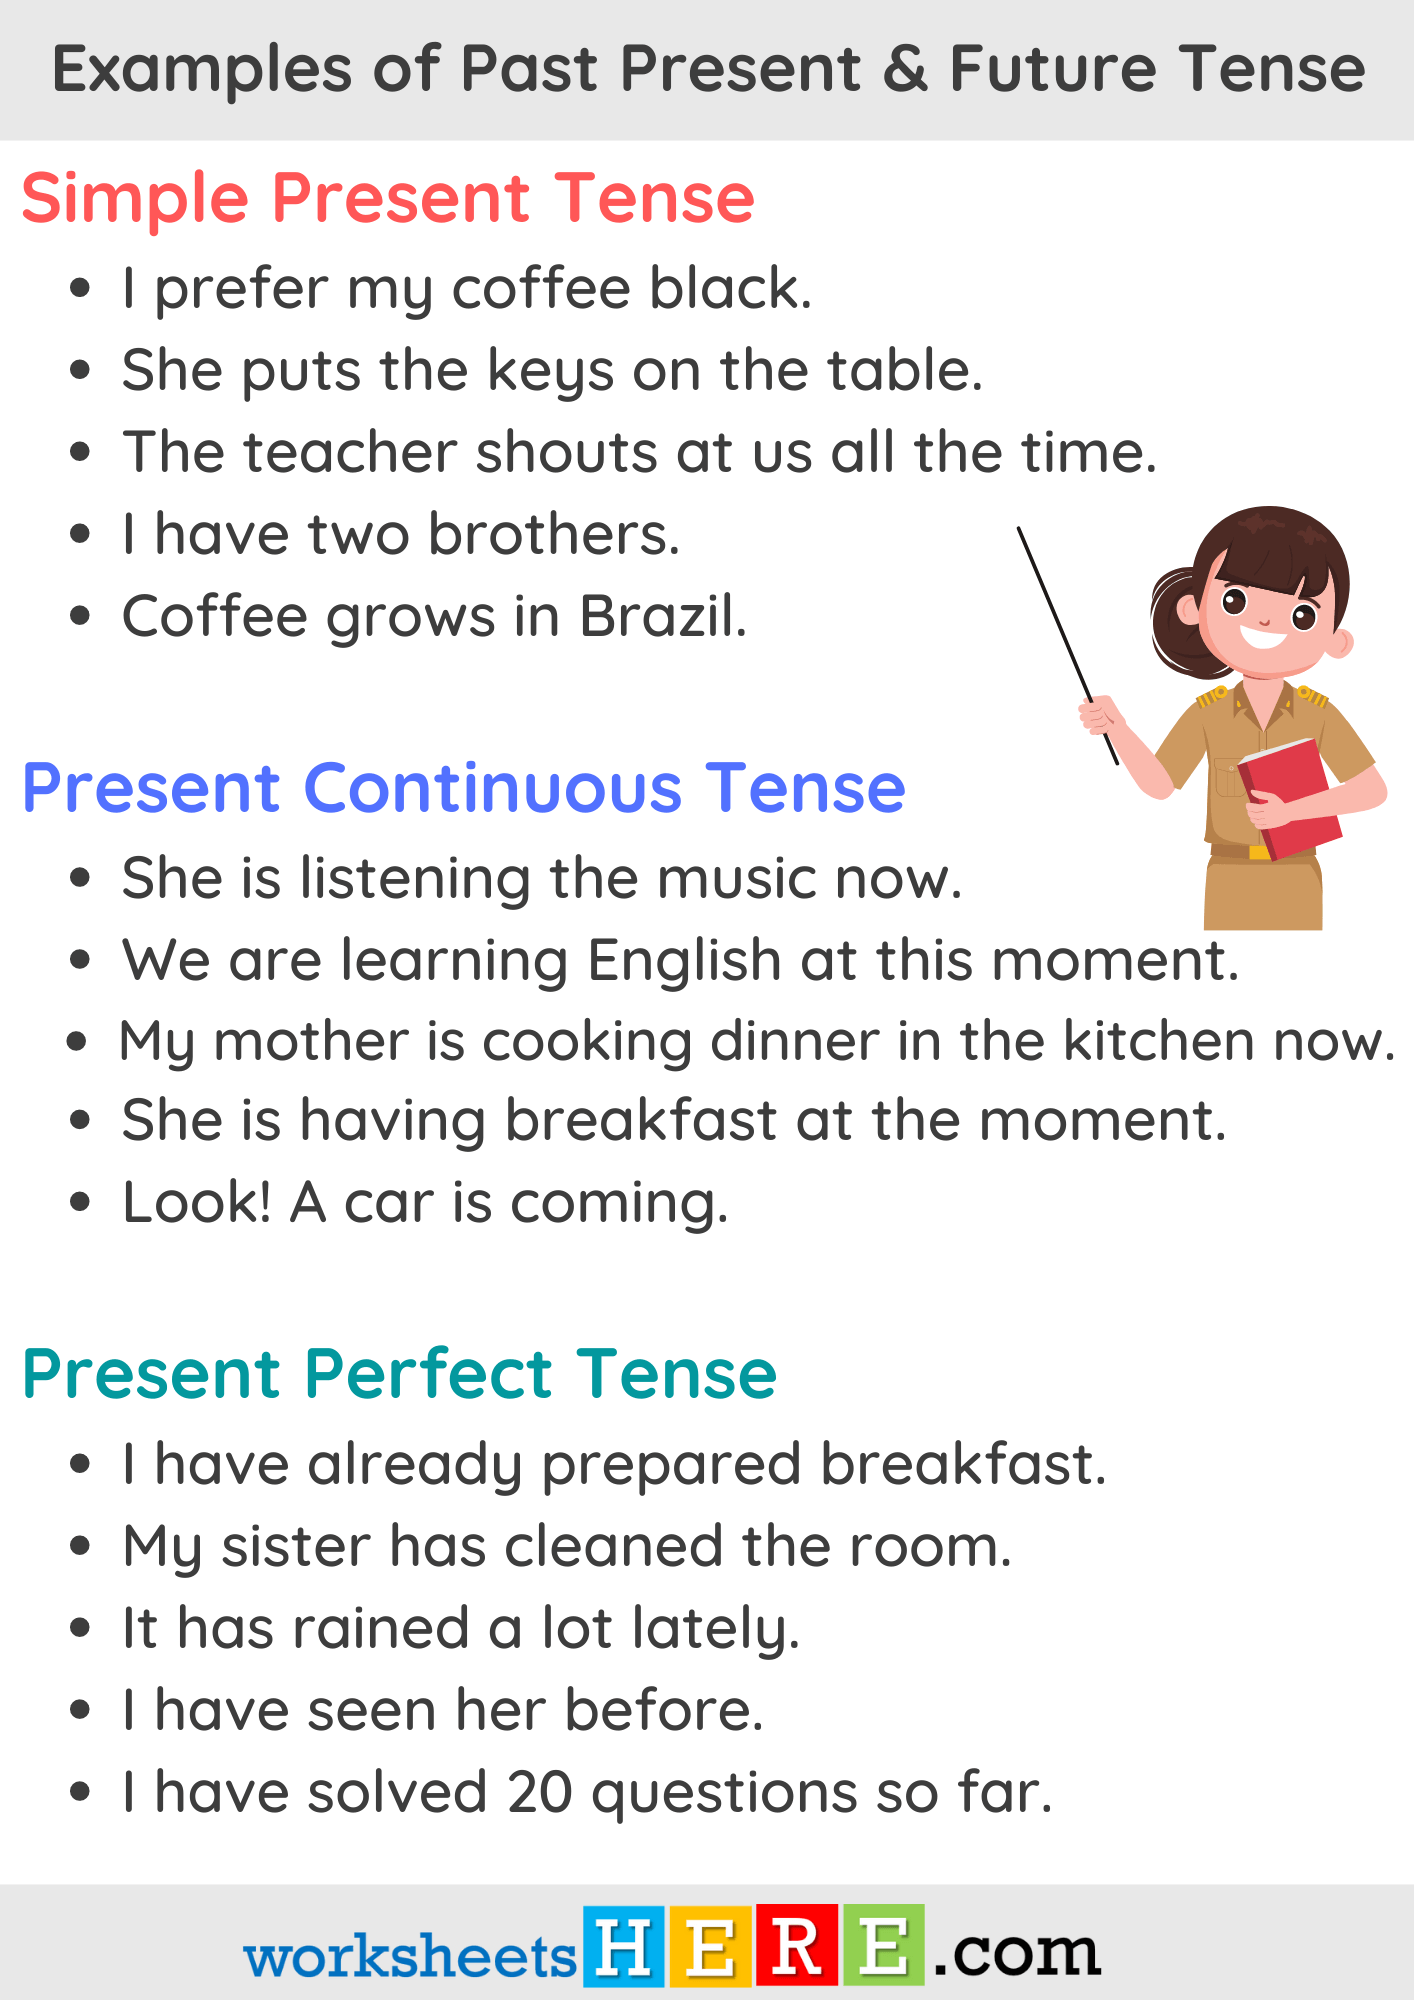 15 Present Past Future Tense Sentences Examples PDF Worksheet For Students